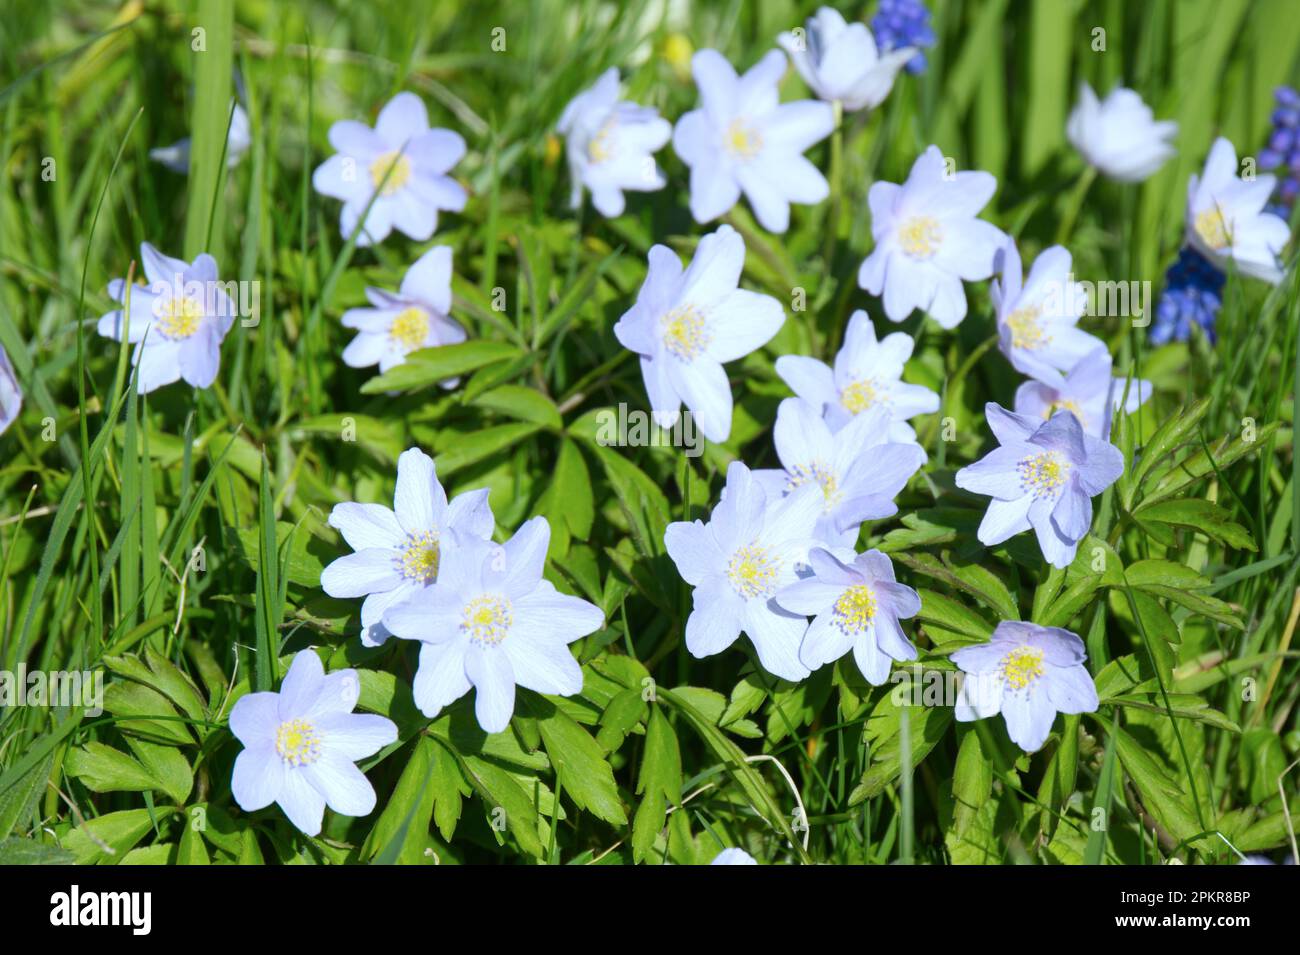 Pale blue spring flowers of wood anemone, anemone nemorosa Robinsoniana naturalised in grass, UK garden April Stock Photo